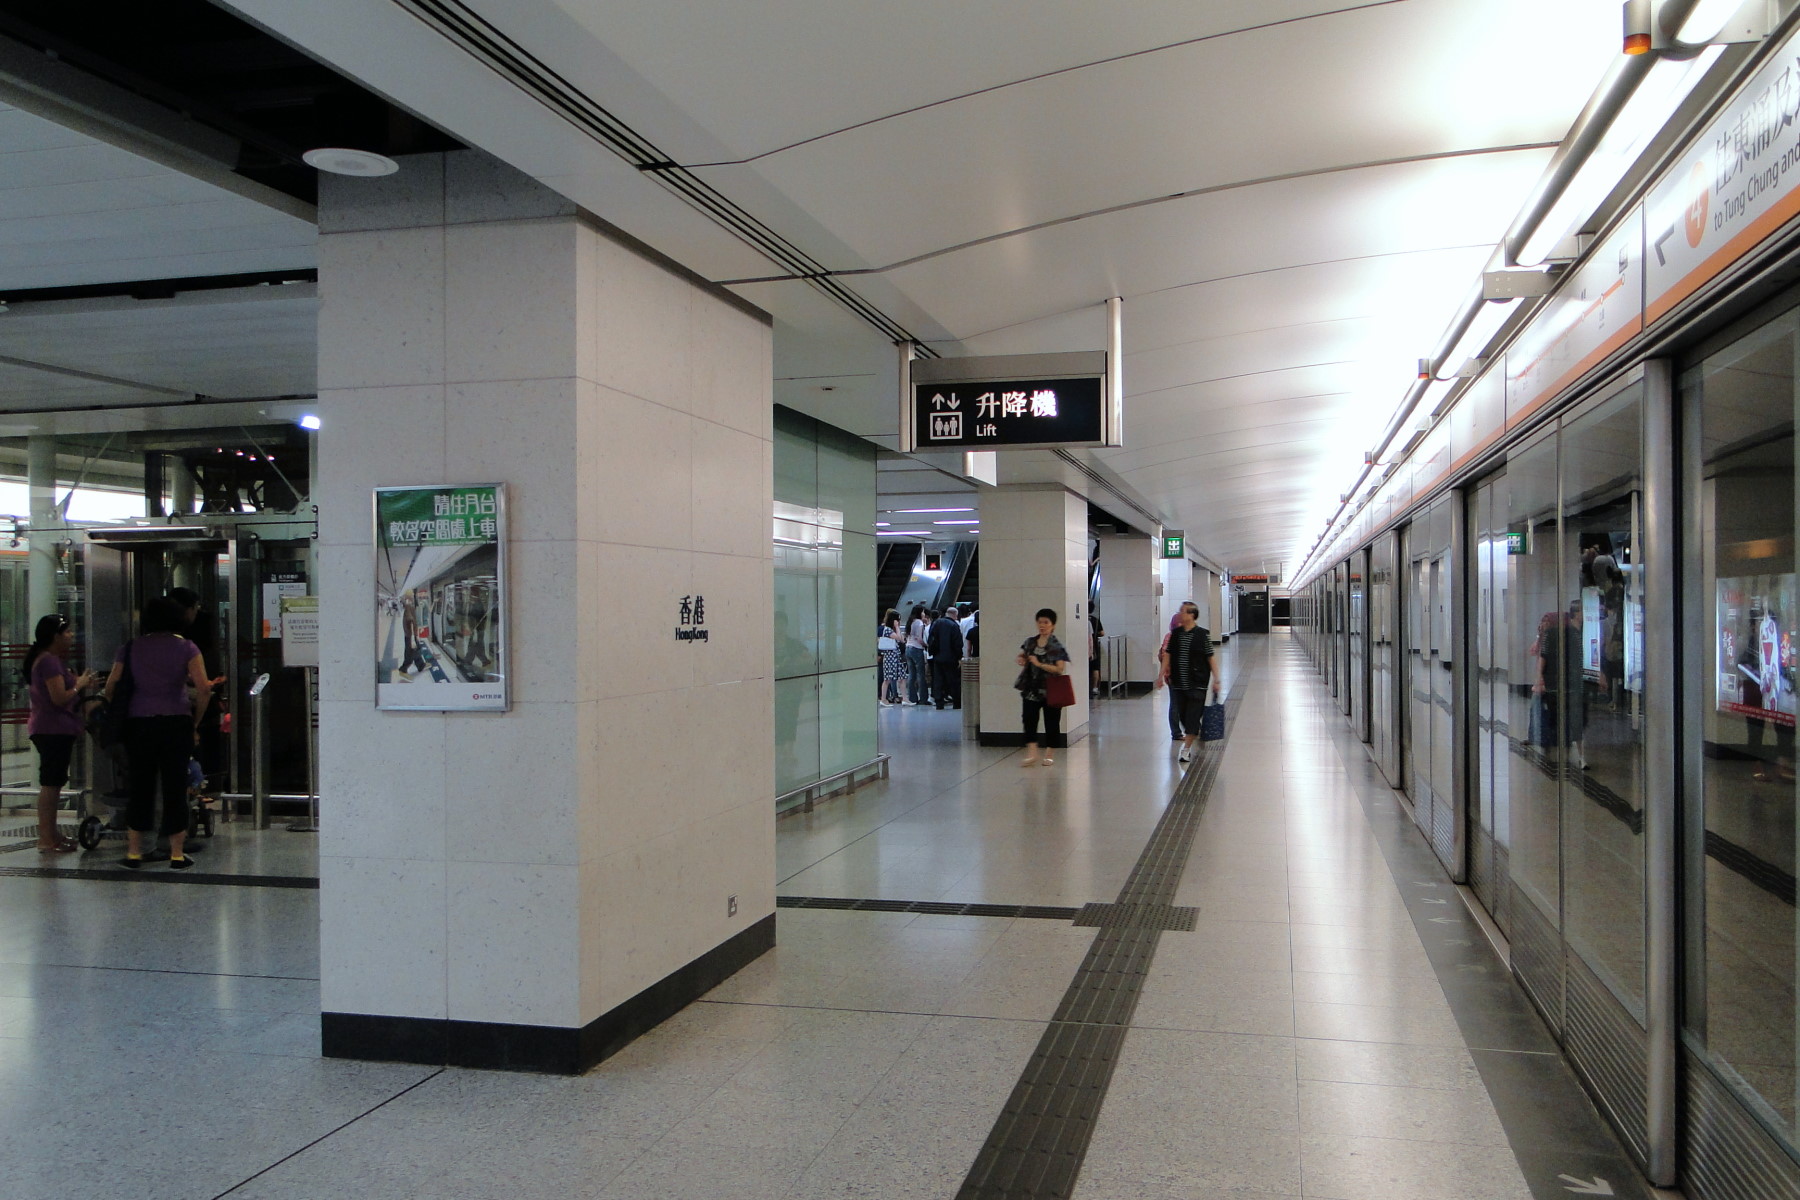 Station Entrance, Central MTR Station Hong Kong, 2003 - Program Contractors